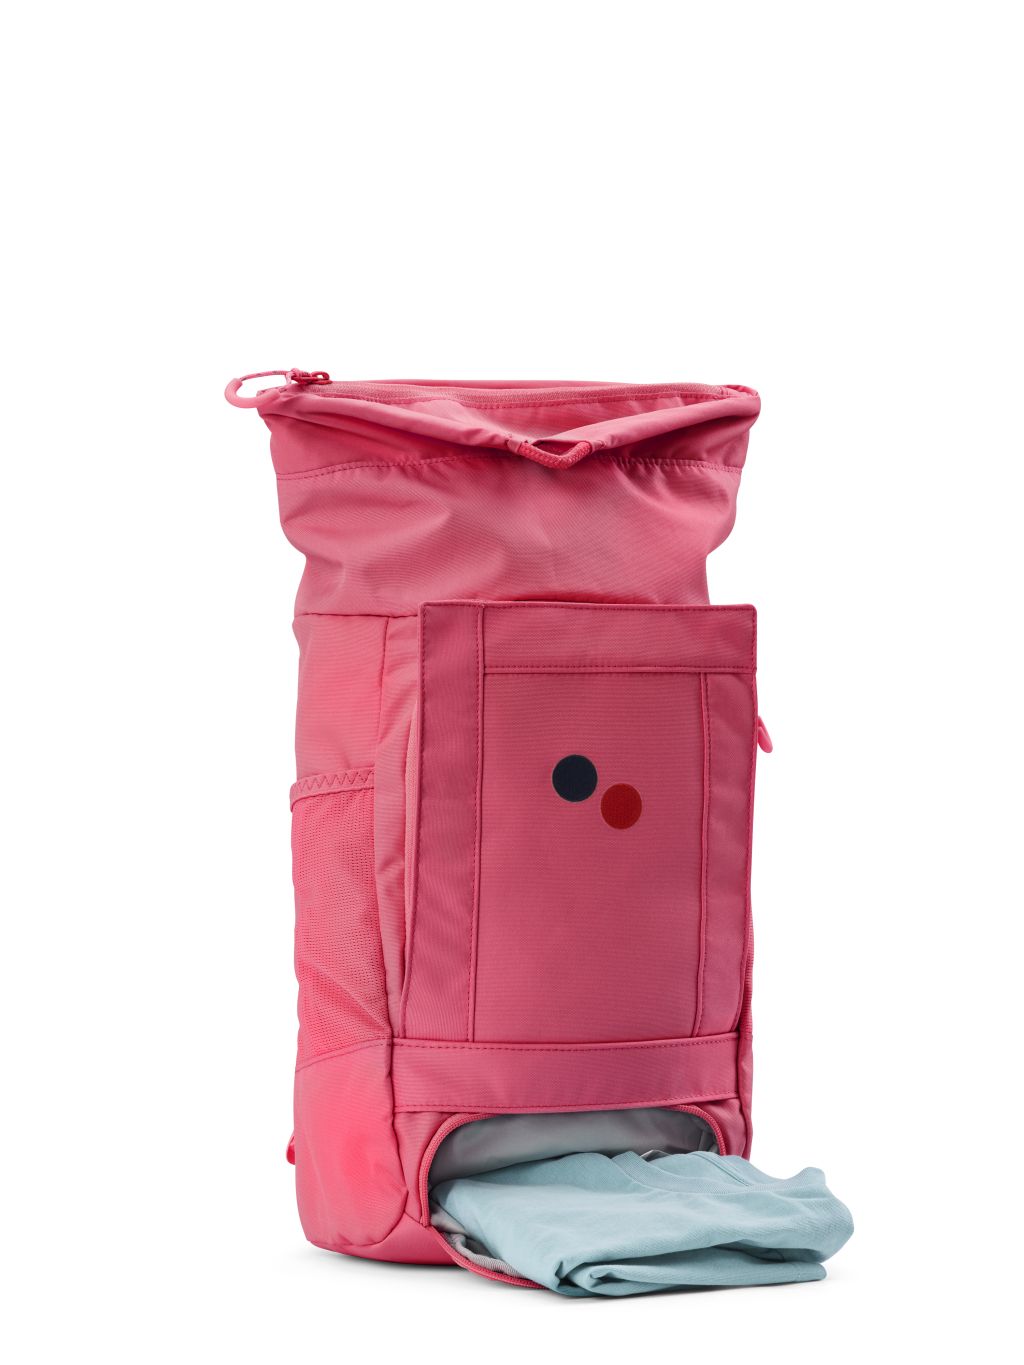 Blok Mini Backpack Watermelon Pink